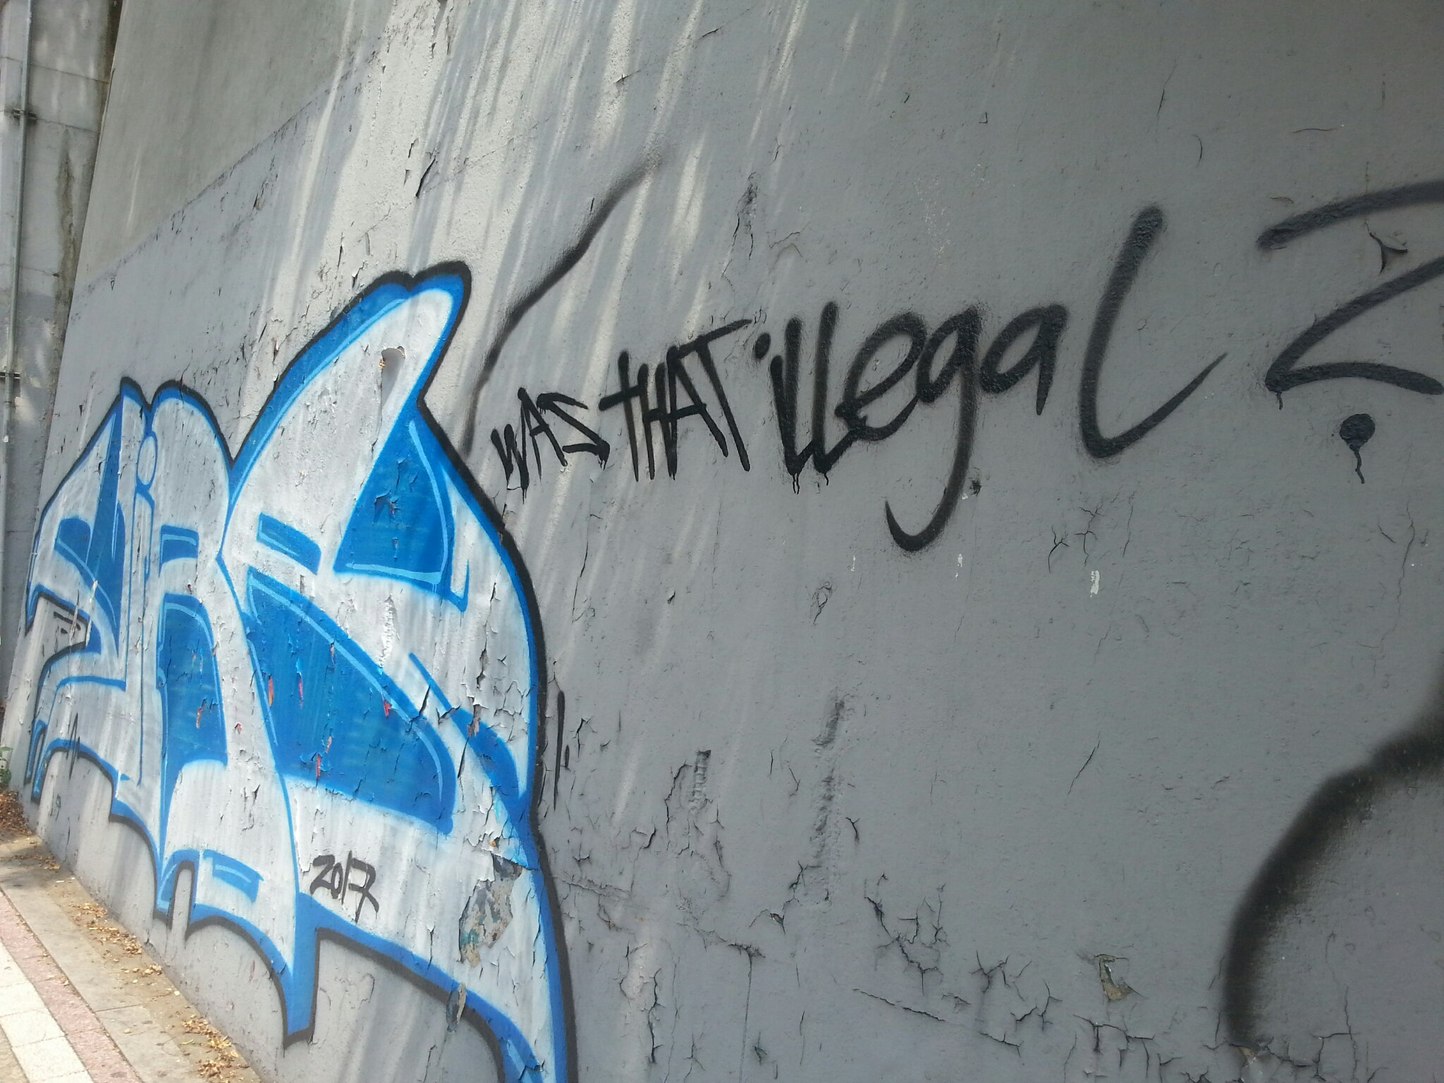 Graffiti asking if it was illegal - meme